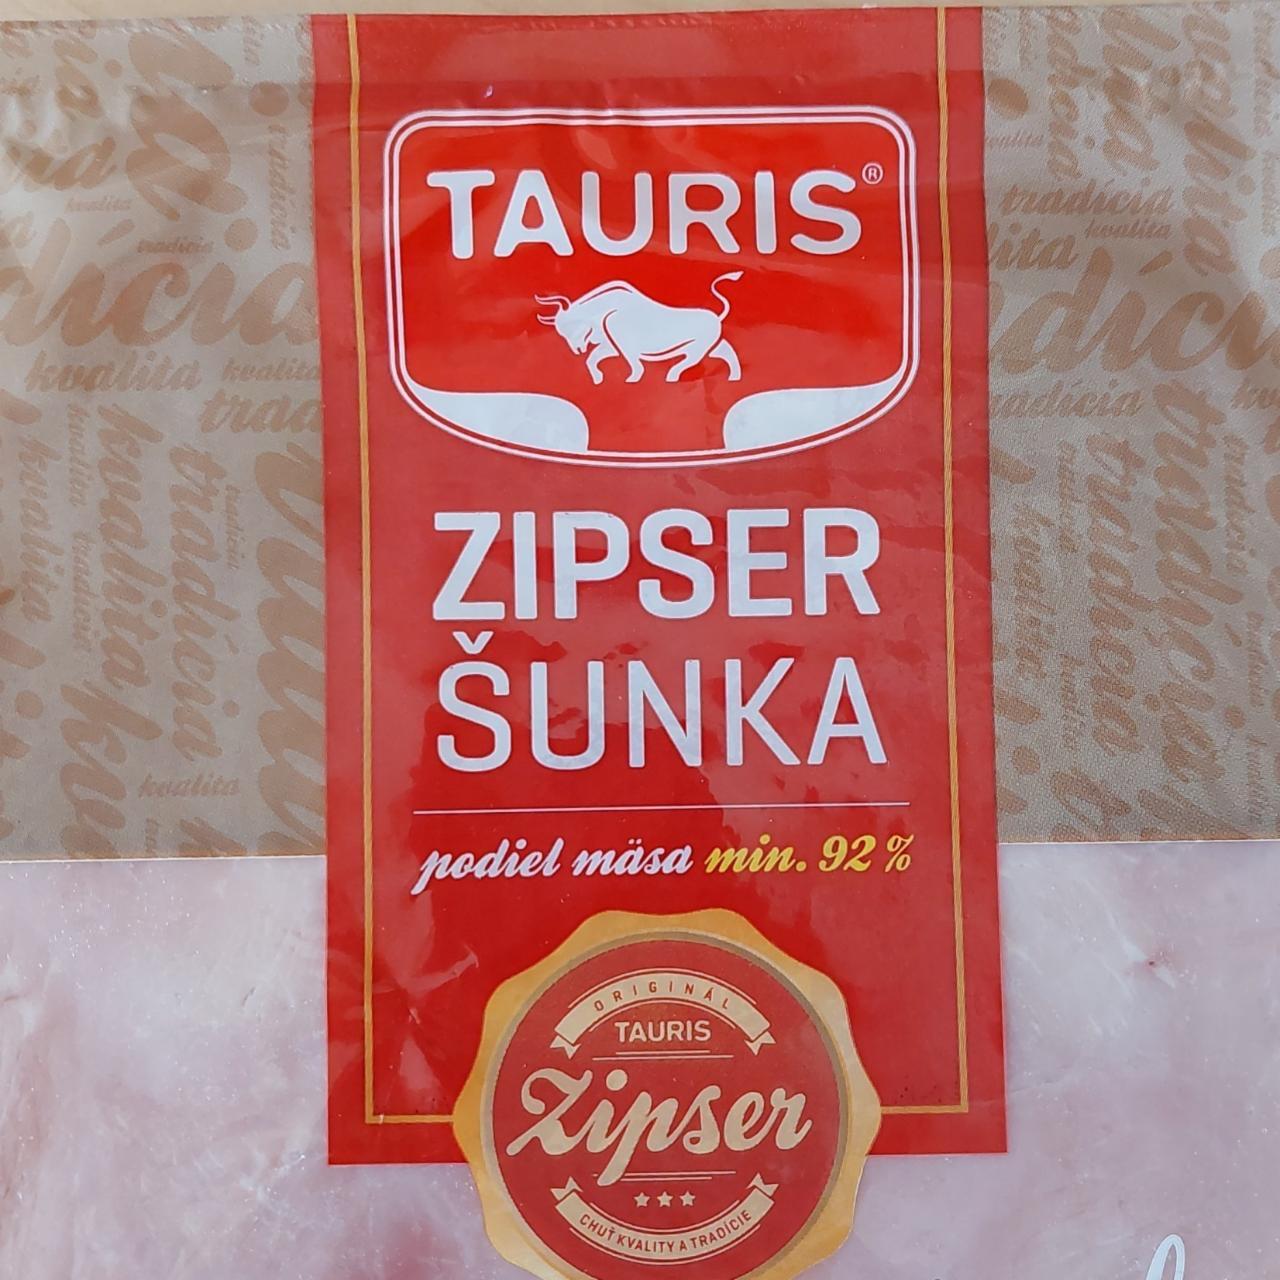 Képek - 92% hústartalmú Zipser sonka Tauris